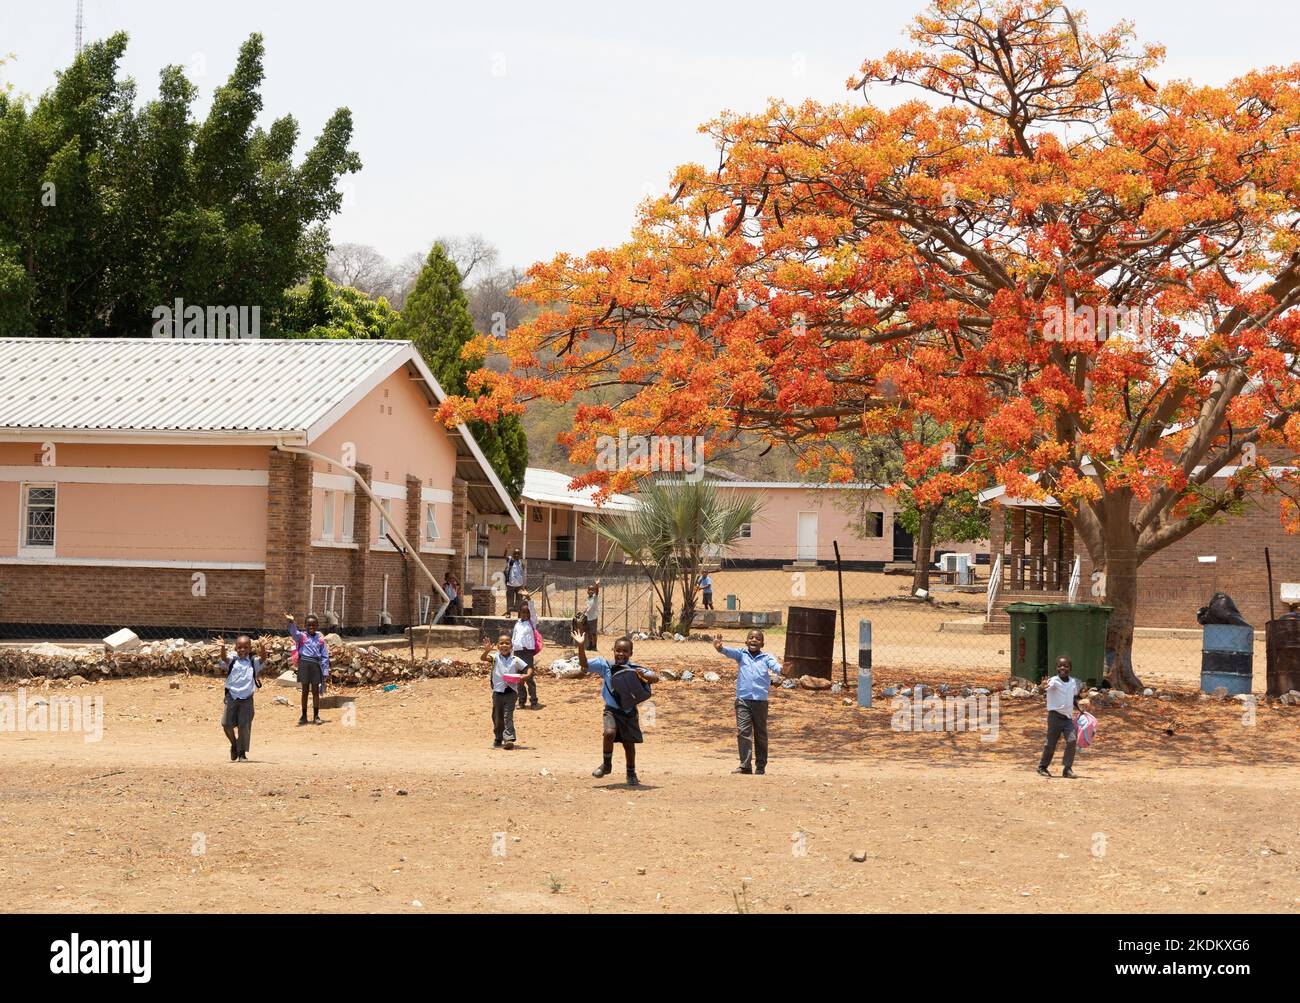 Grundschule Afrika; 10-jährige afrikanische Schüler winken vor ihrer Schule, Kasane Stadt, Botswana Afrika. Bildung in Afrika Stockfoto